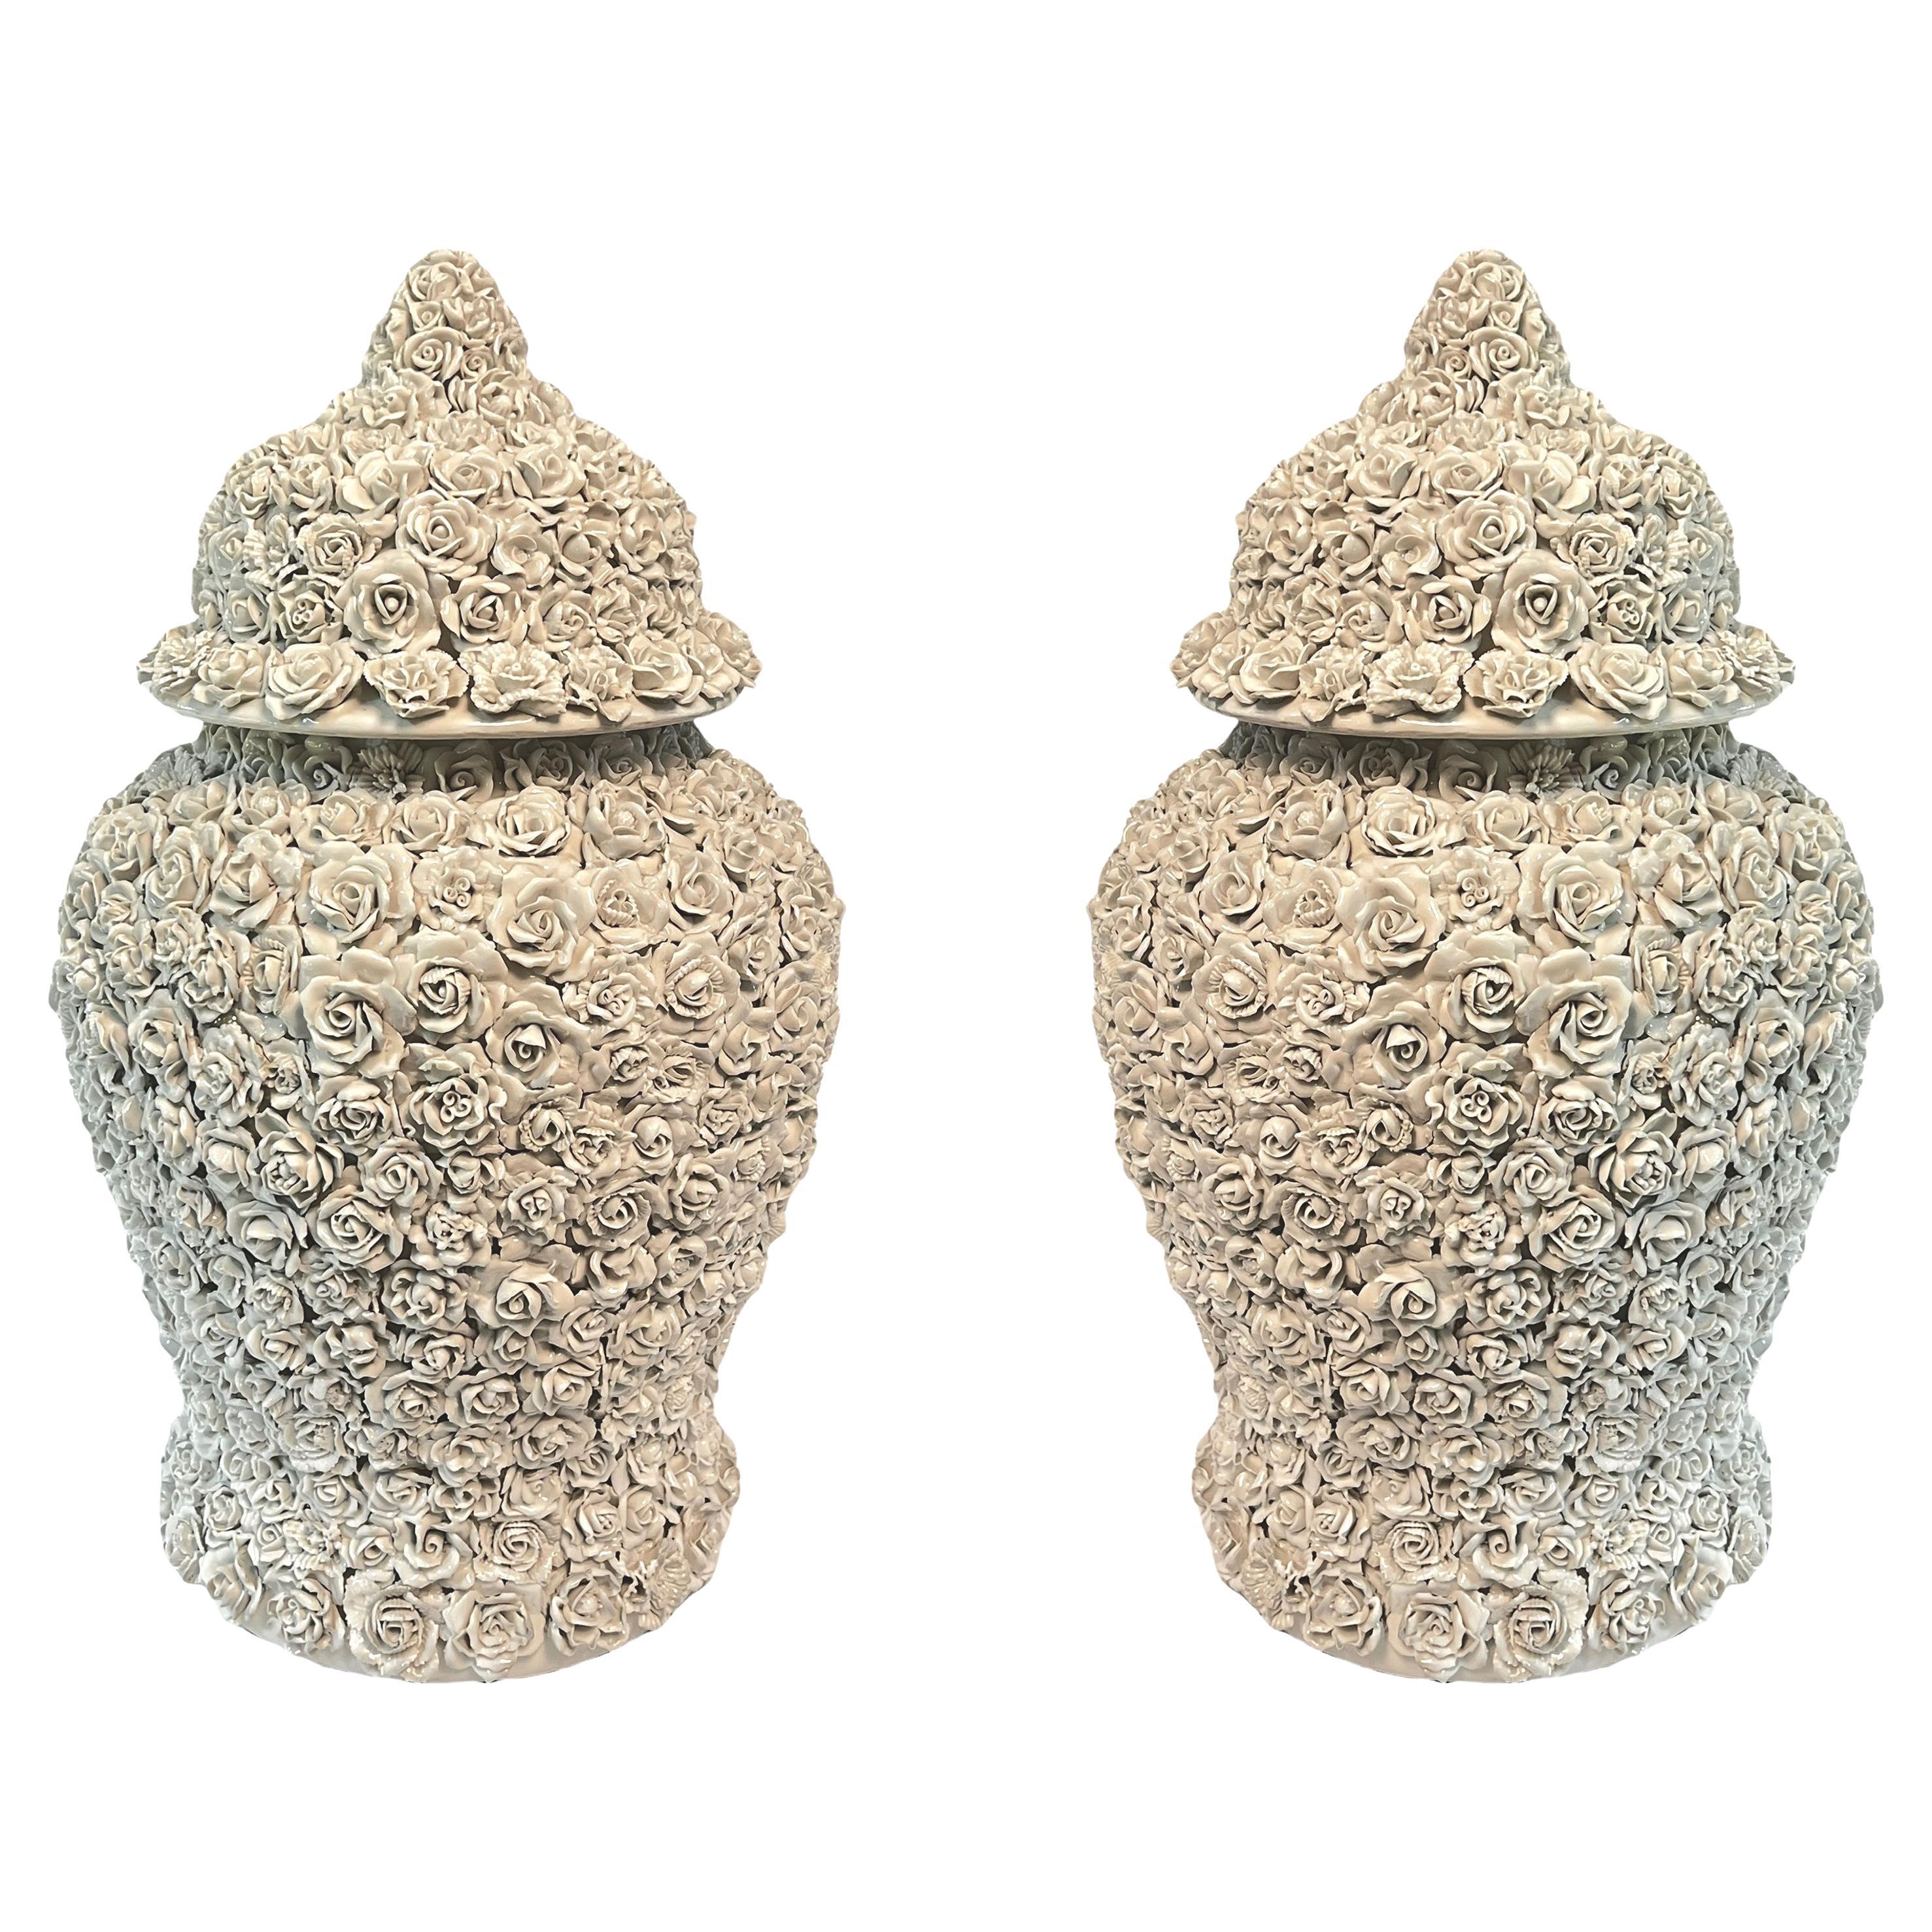 Pair Blanc de Chine Schneeballen Porcelain Vases with Covers